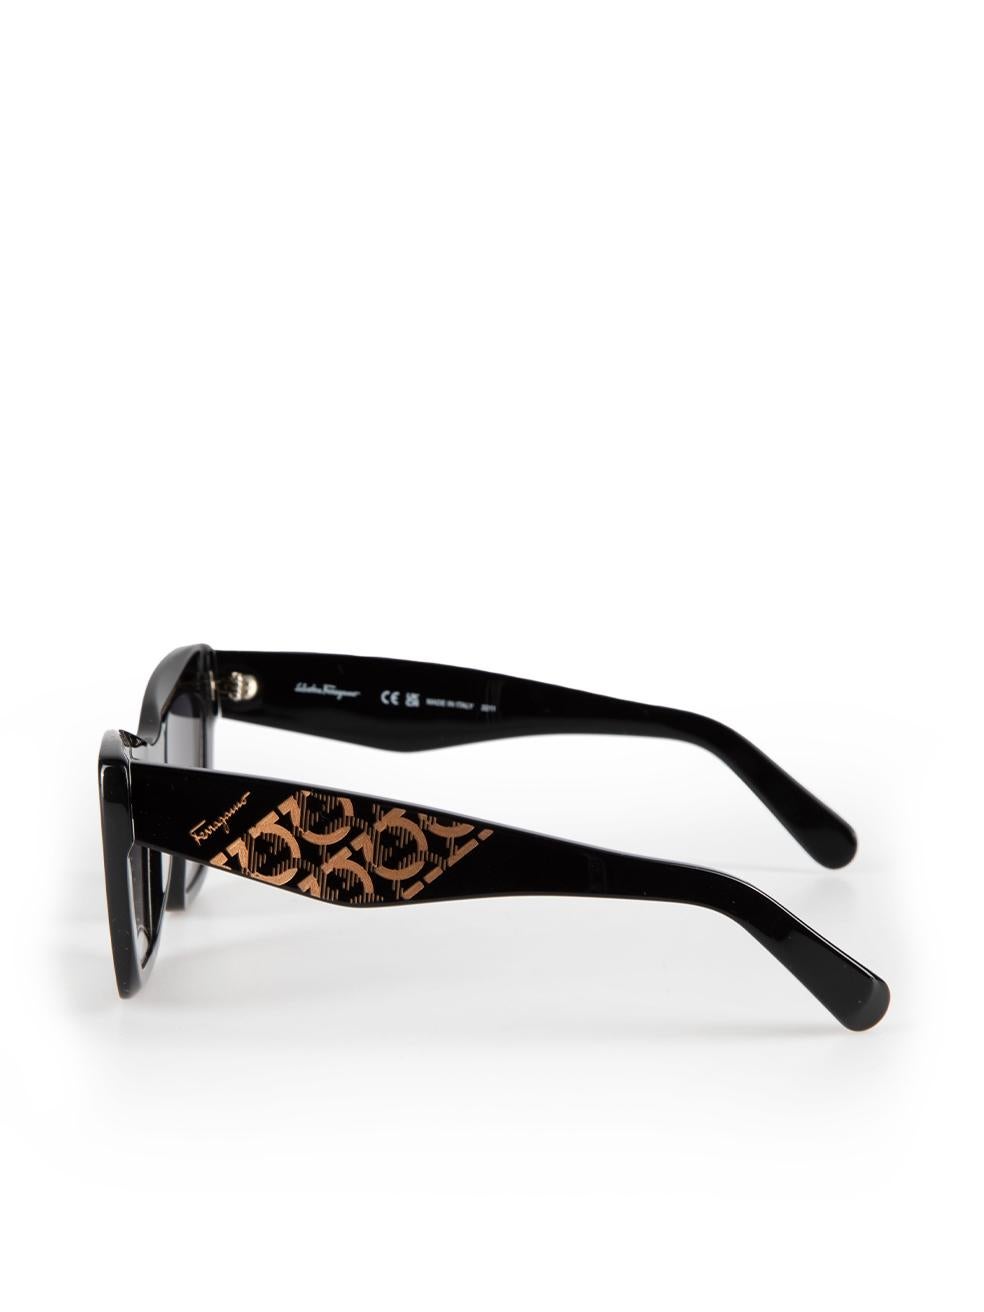 Salvatore Ferragamo Black Cat Eye Gradient Sunglasses For Sale 1